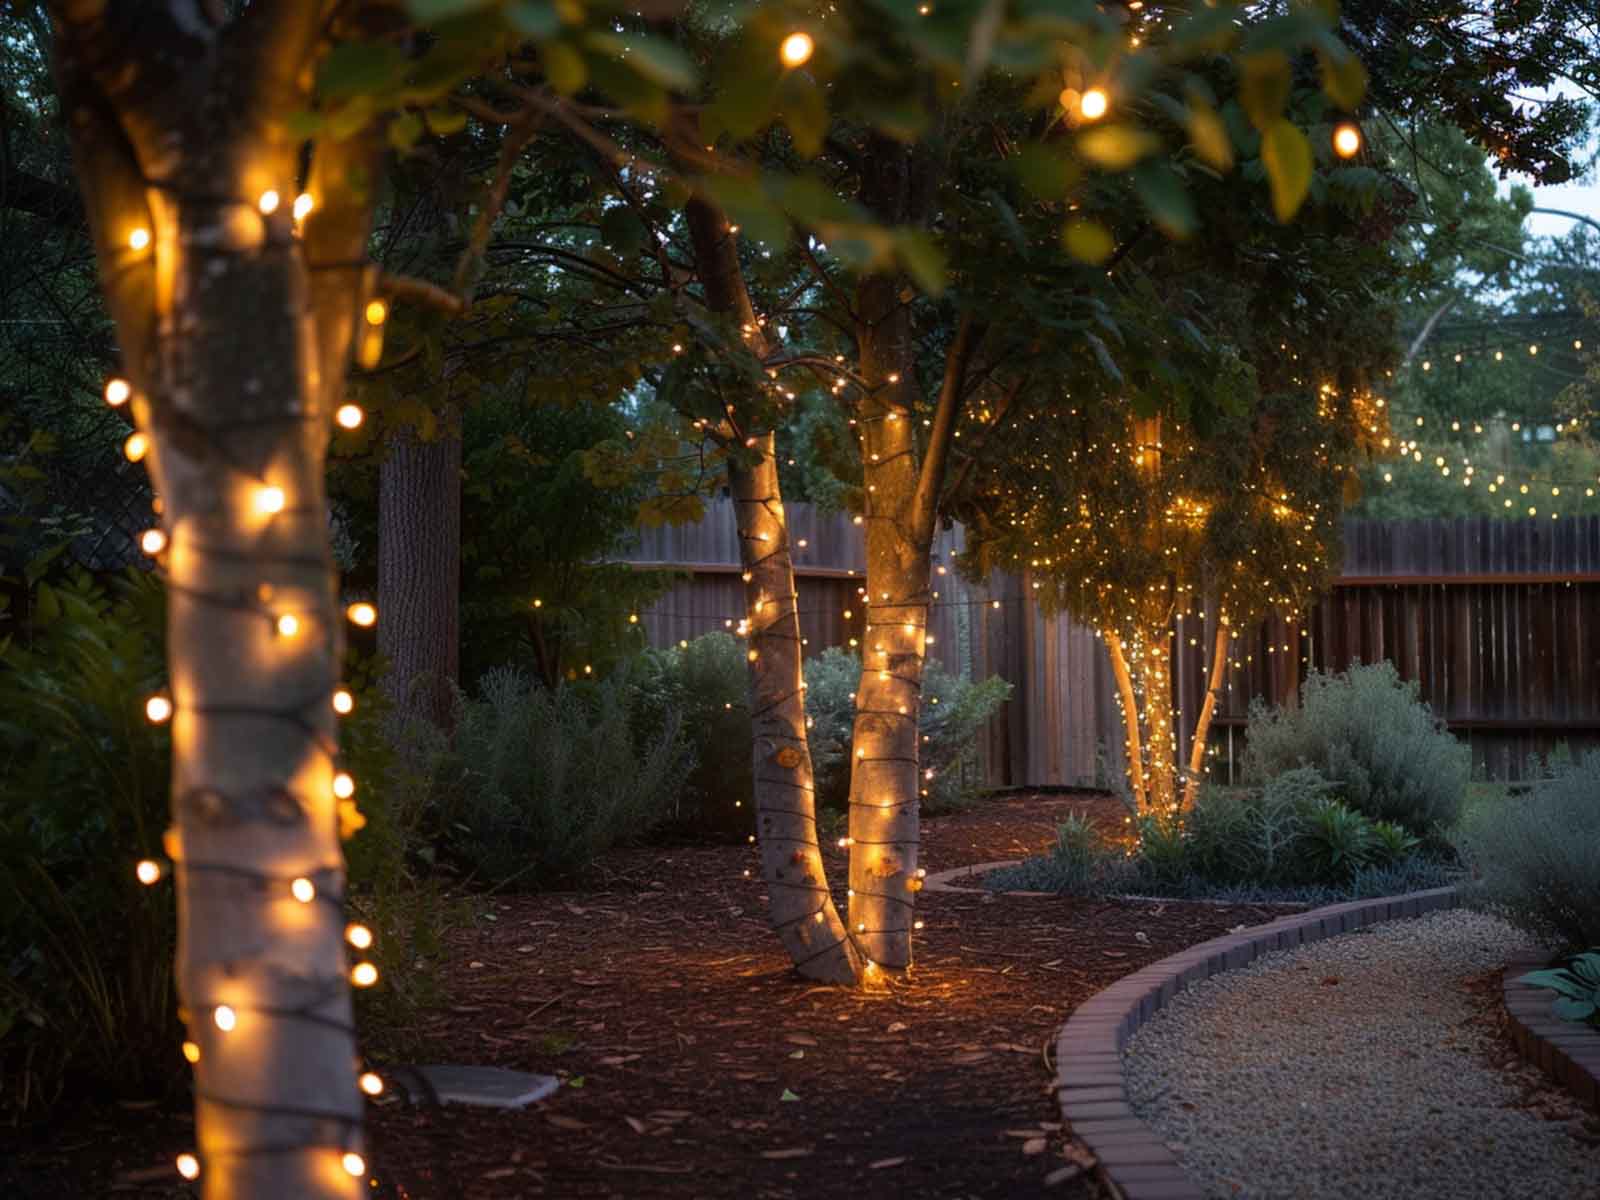 String lights wrapped around tree trucks in a garden